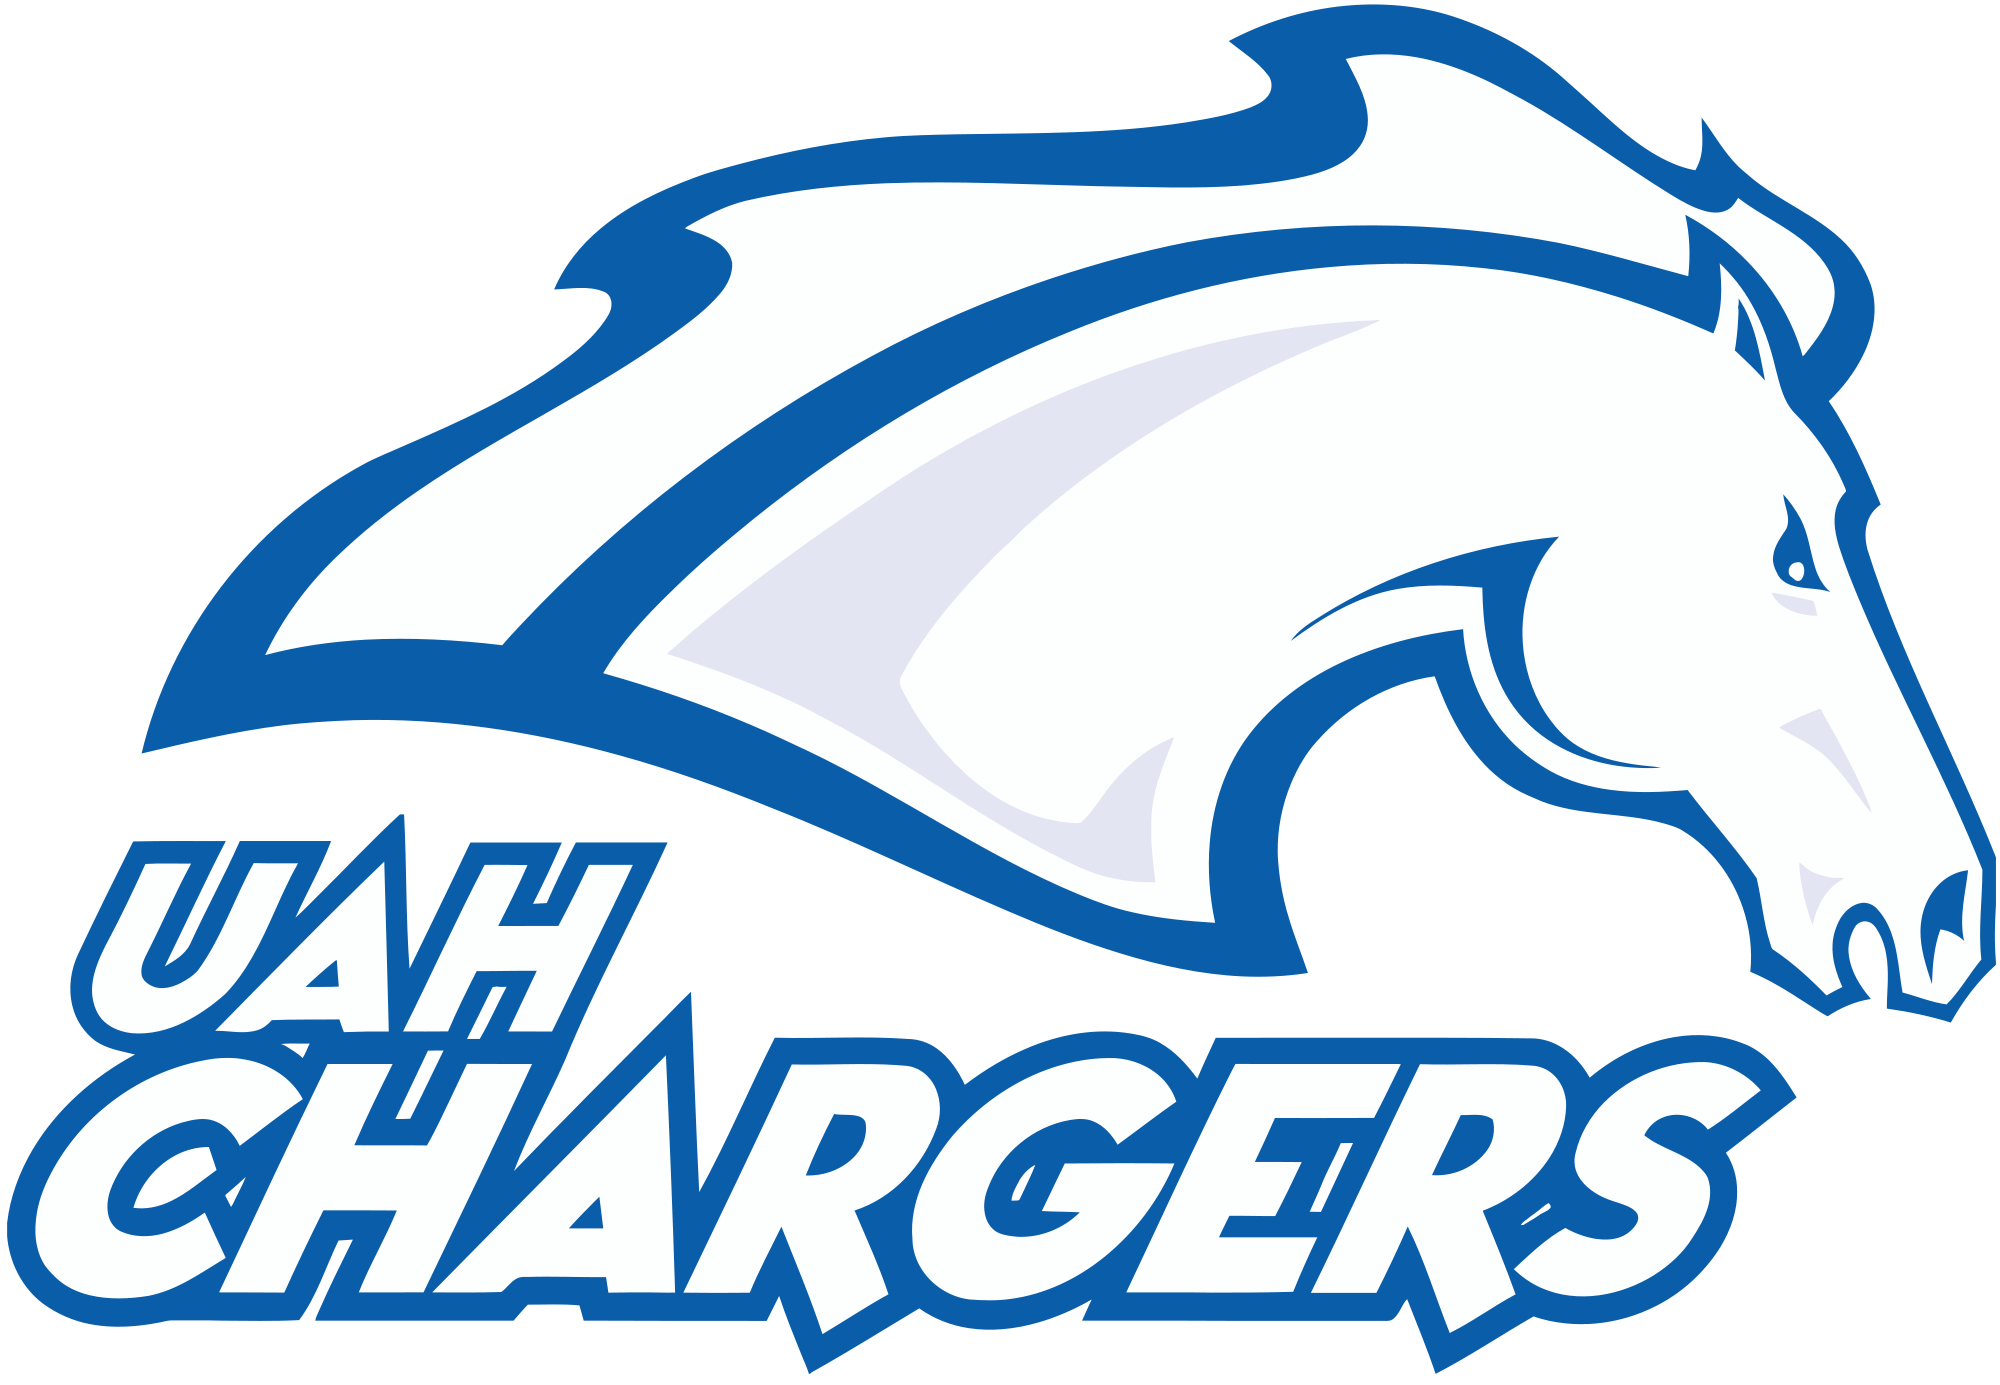 UAH Logo - UAH Chargers! | Logos - College | Alabama, University of alabama, Logos